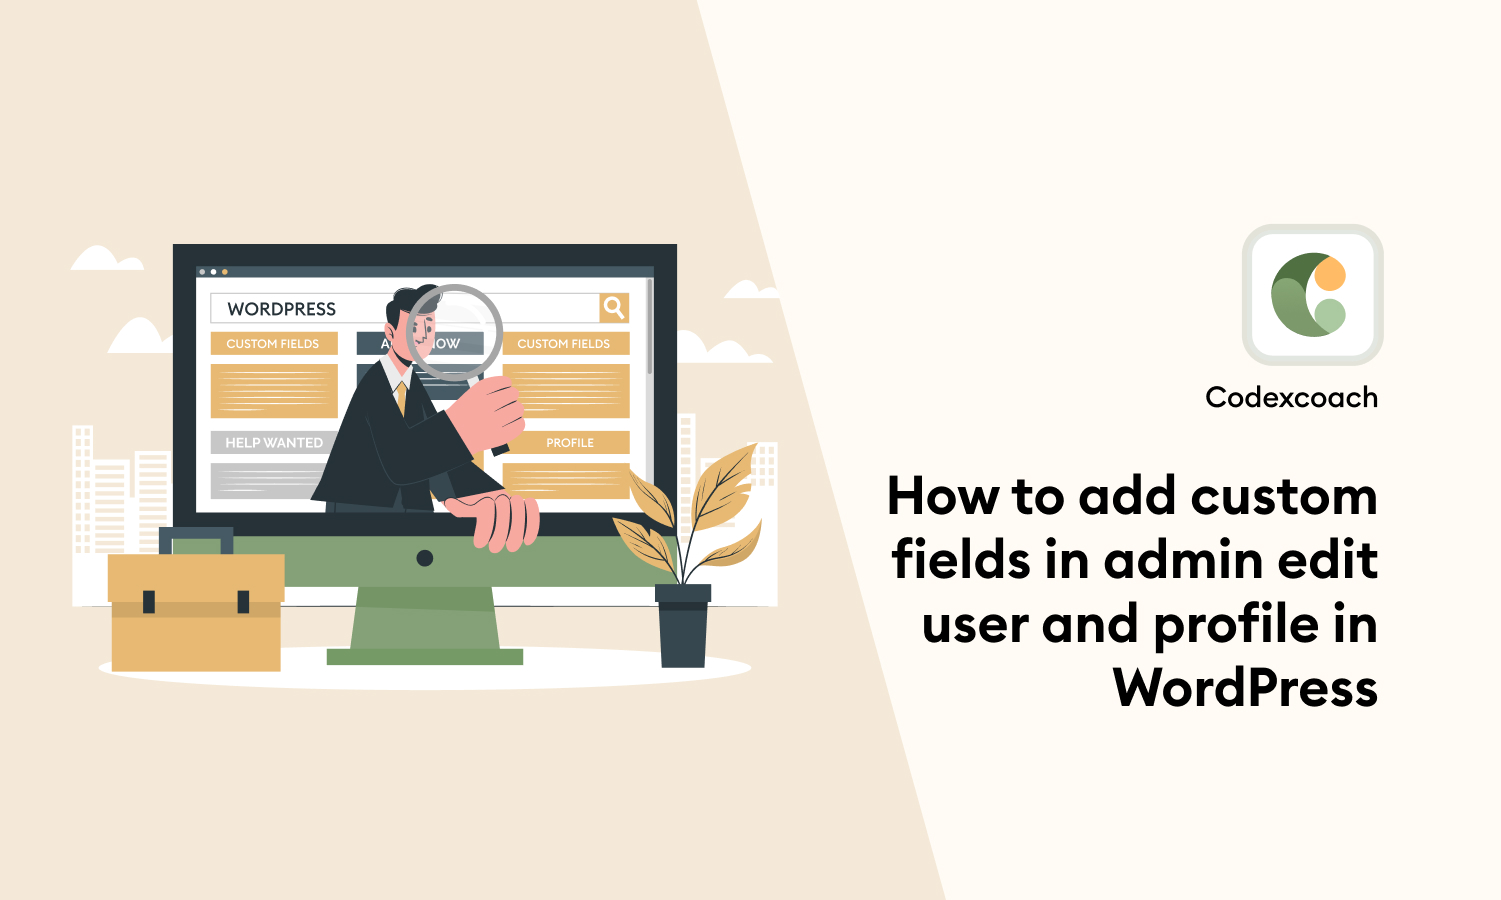 How to add custom fields in admin edit user and profile in WordPress